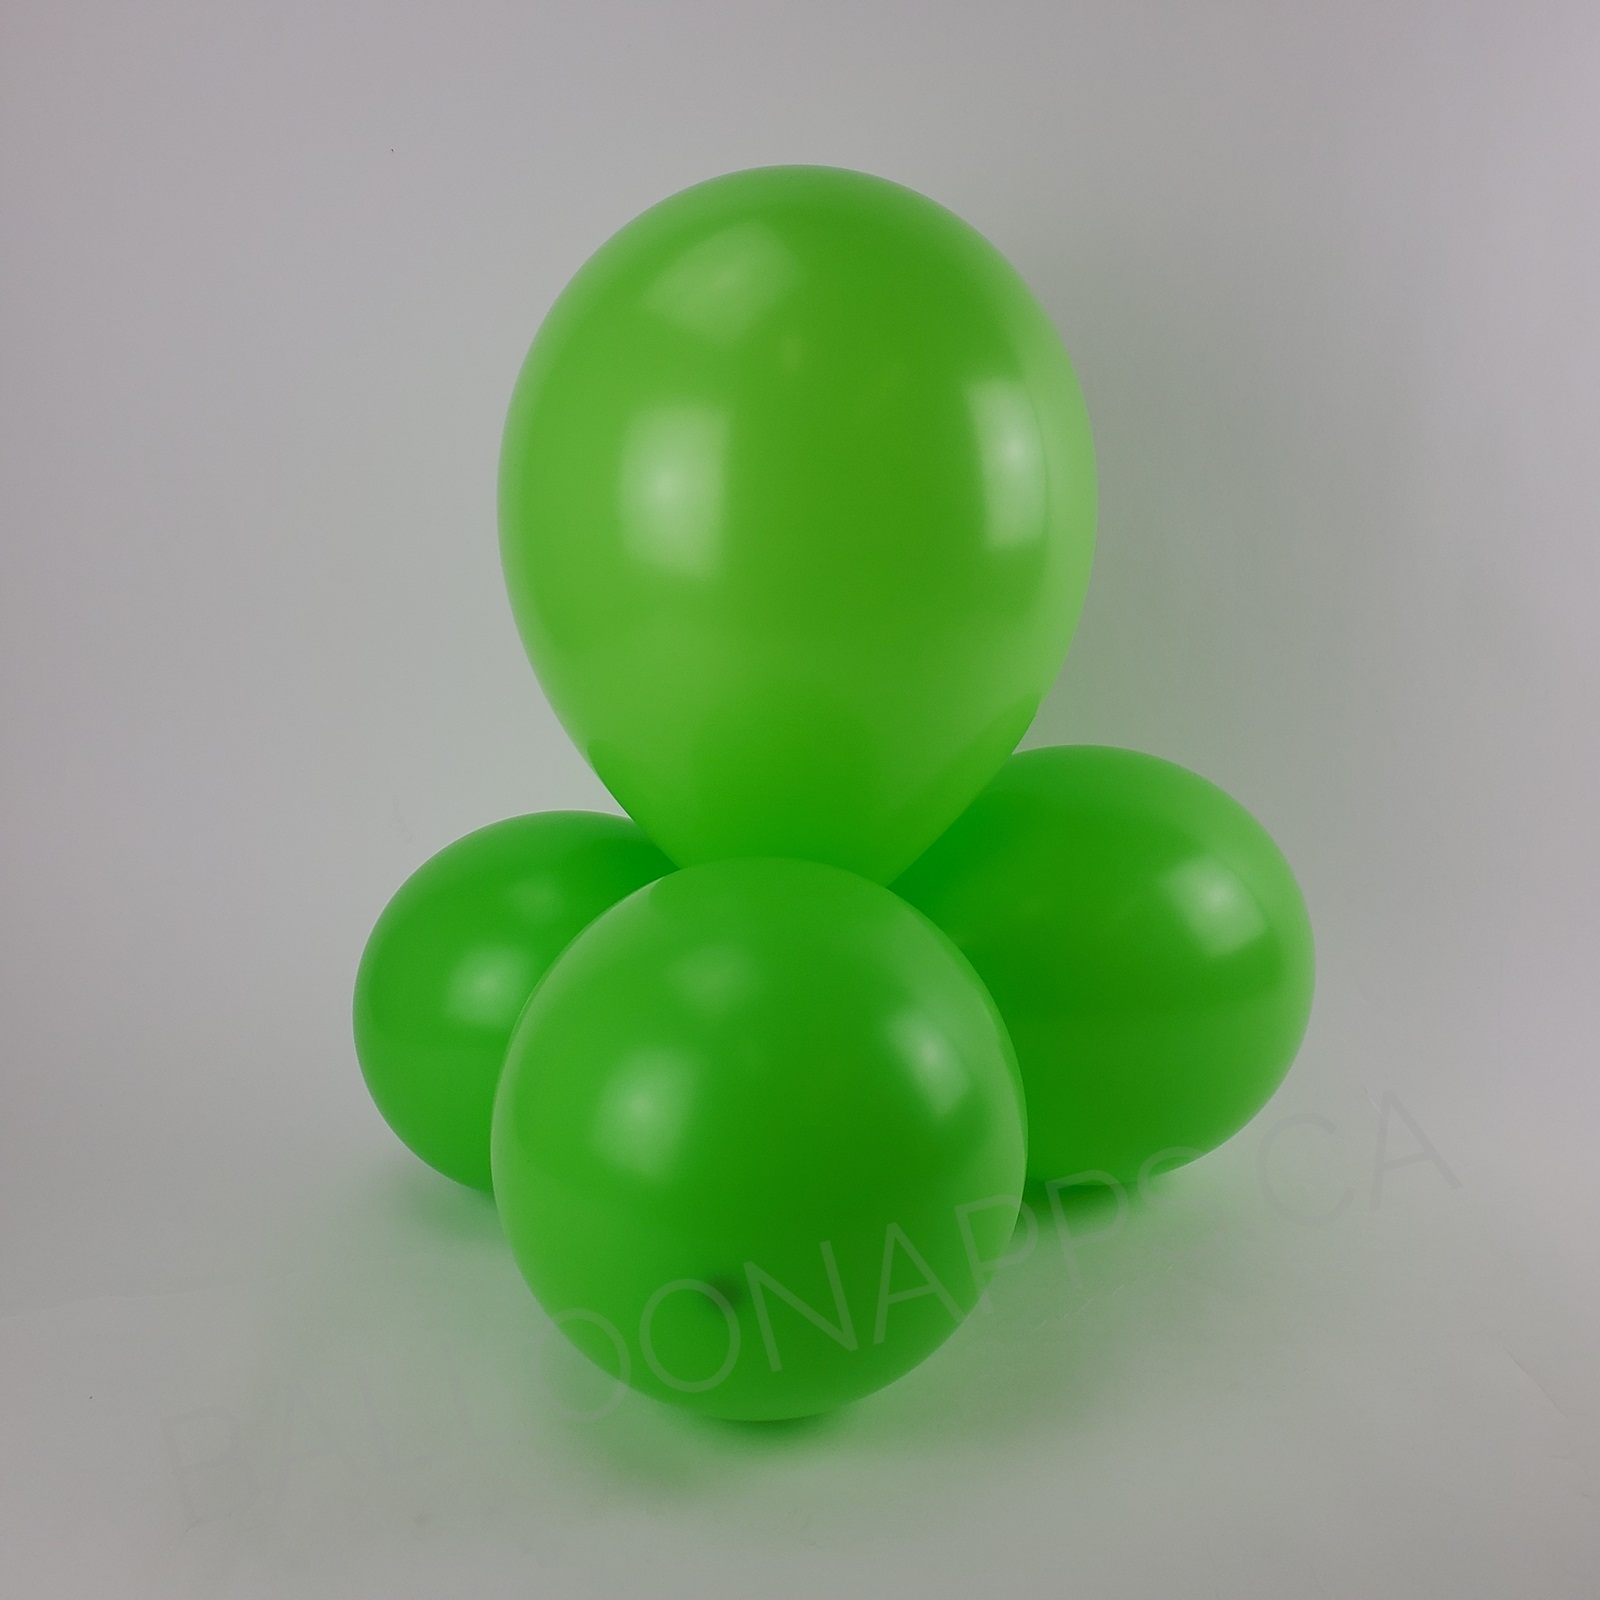 balloon texture SEM (50) 260 Deluxe Key Lime balloons